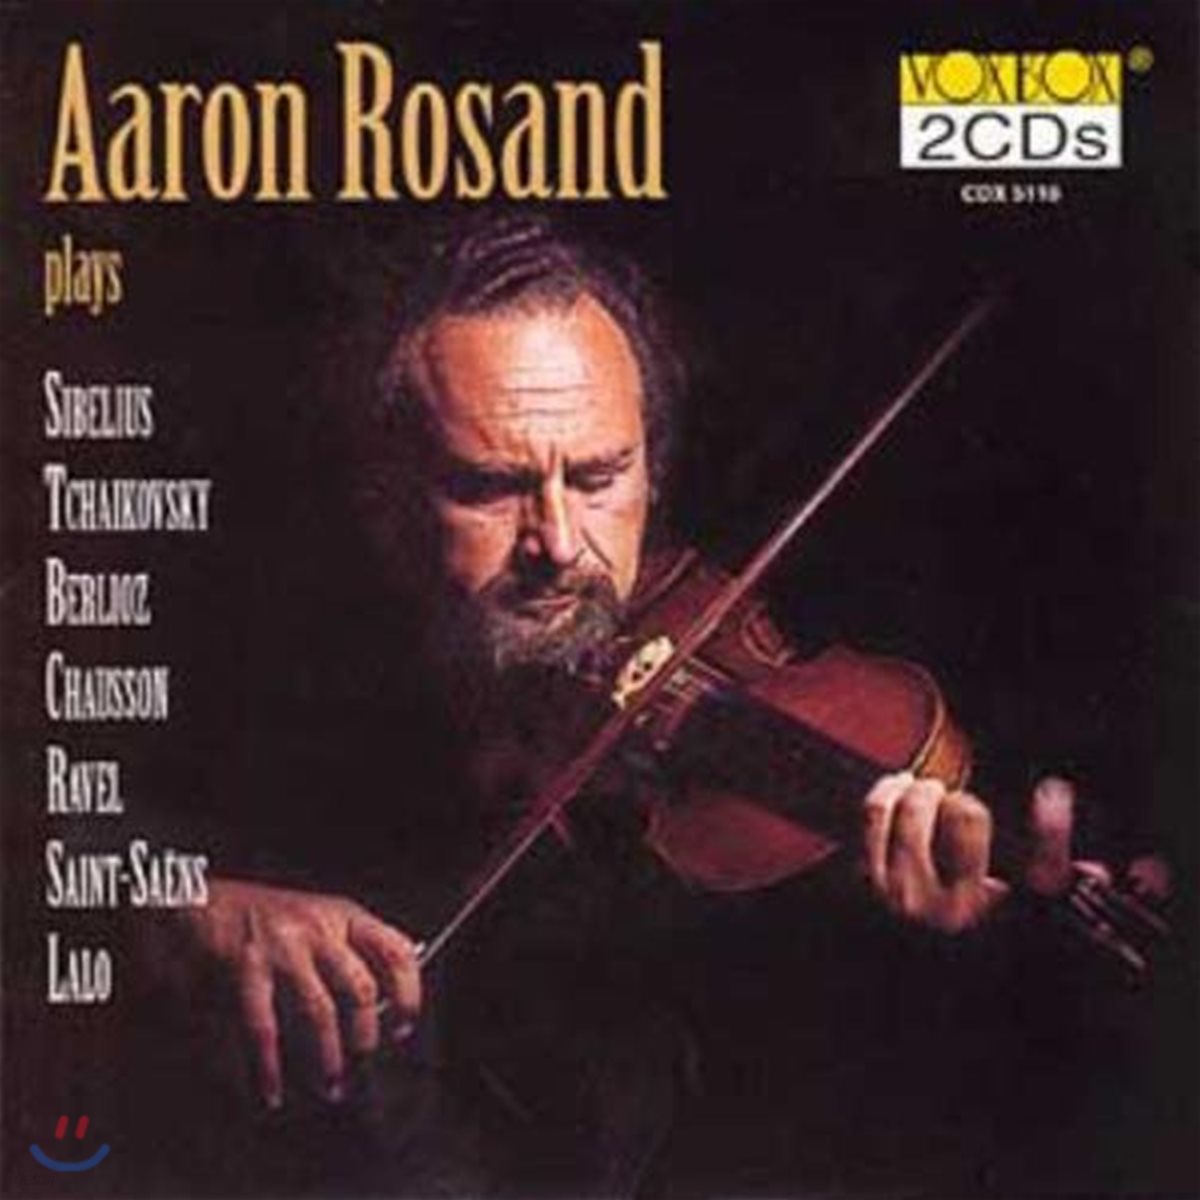 Aaron Rosand 아론 로잔드 - 바이올린 연주집 (Plays Sibelius / Tchaikovsky / Berlioz / Chausson)